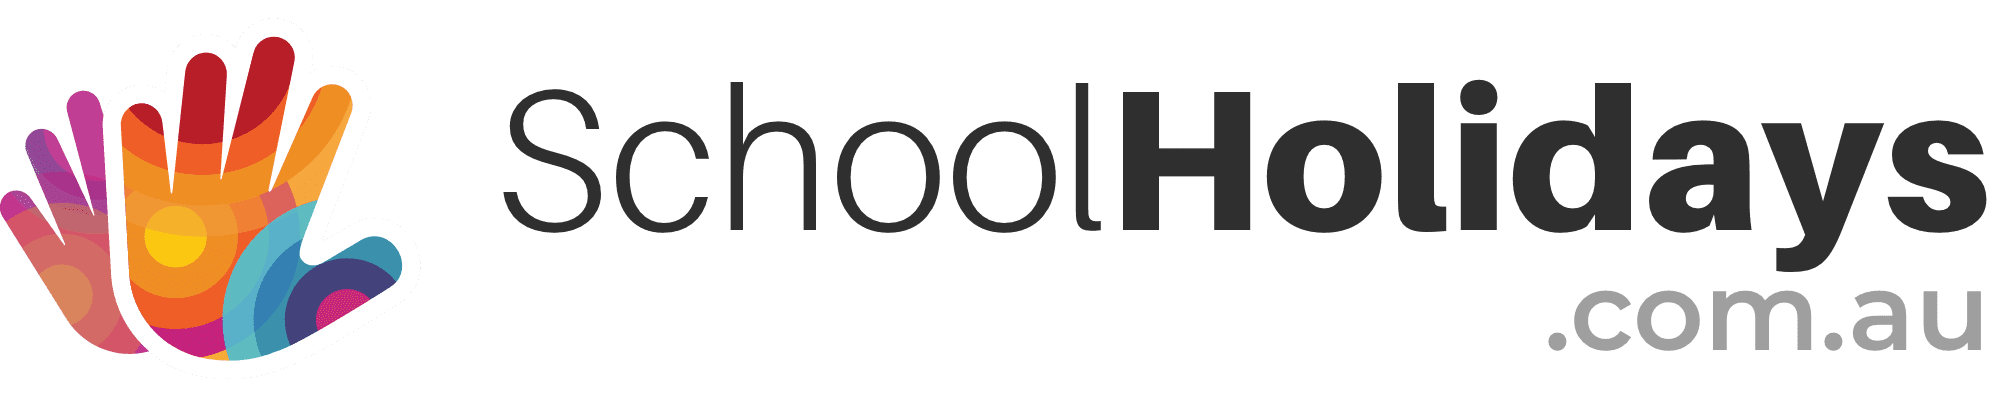 Schoolholidays logo